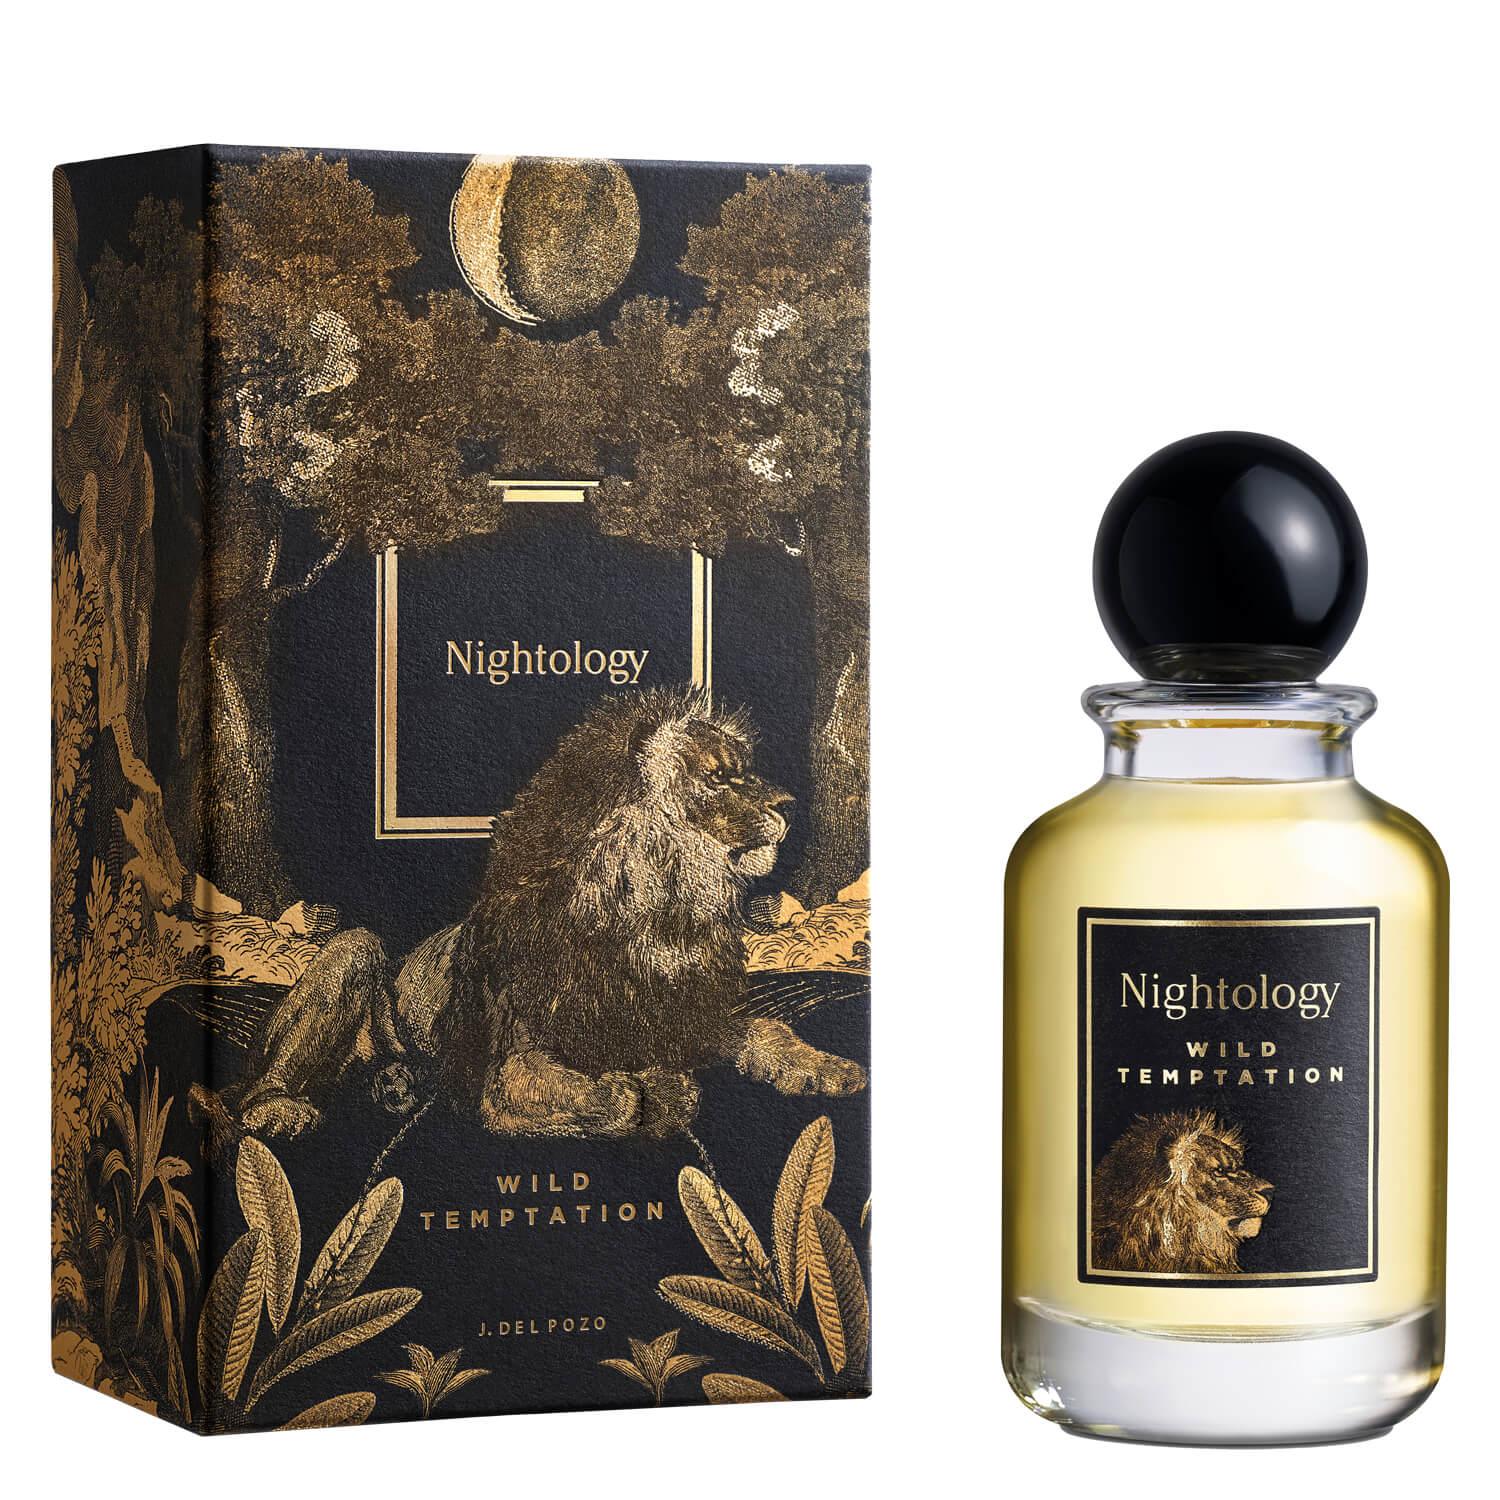 Nightology - Wild Temptation Eau de Parfum